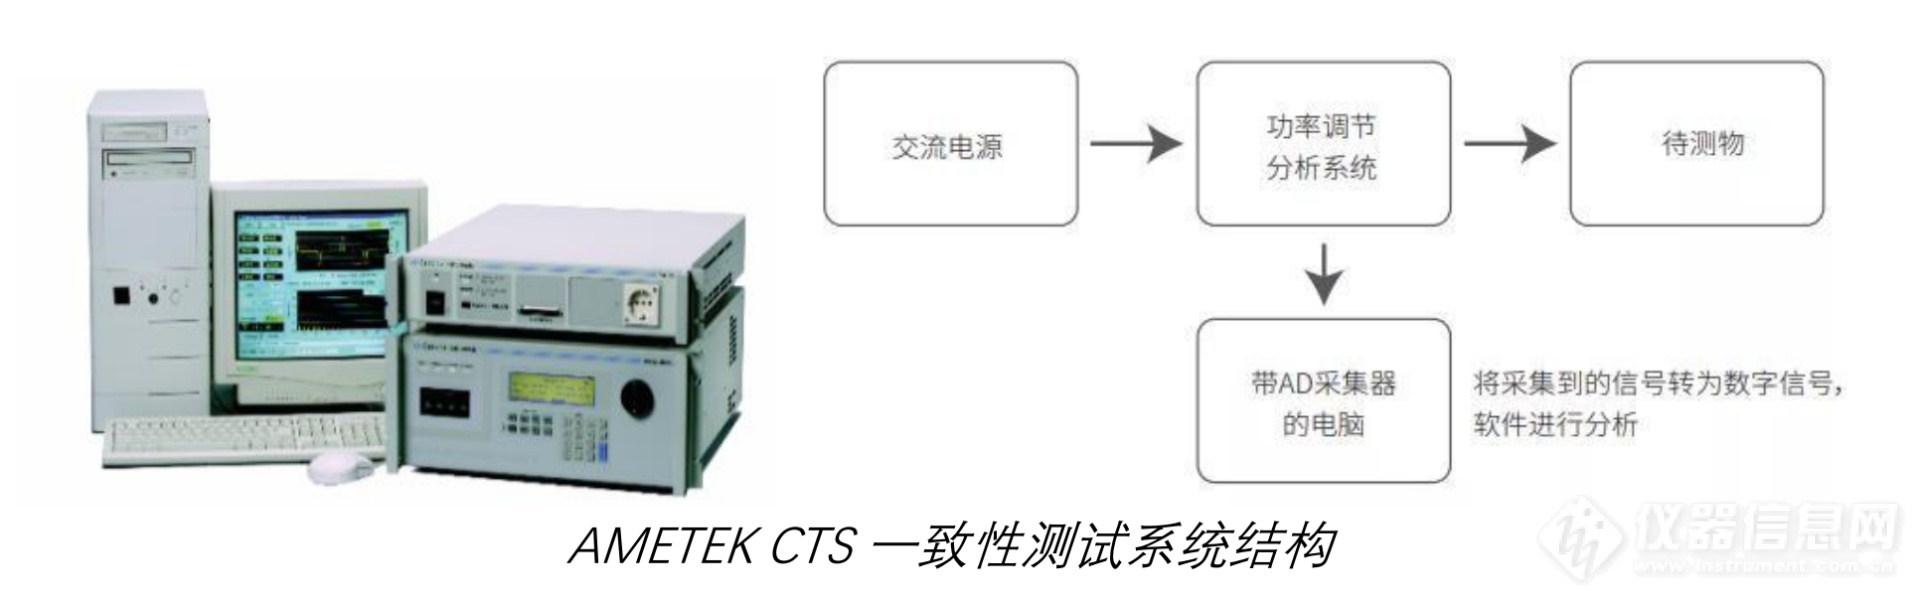 AMETEK CTS一致性测试系统结构.png